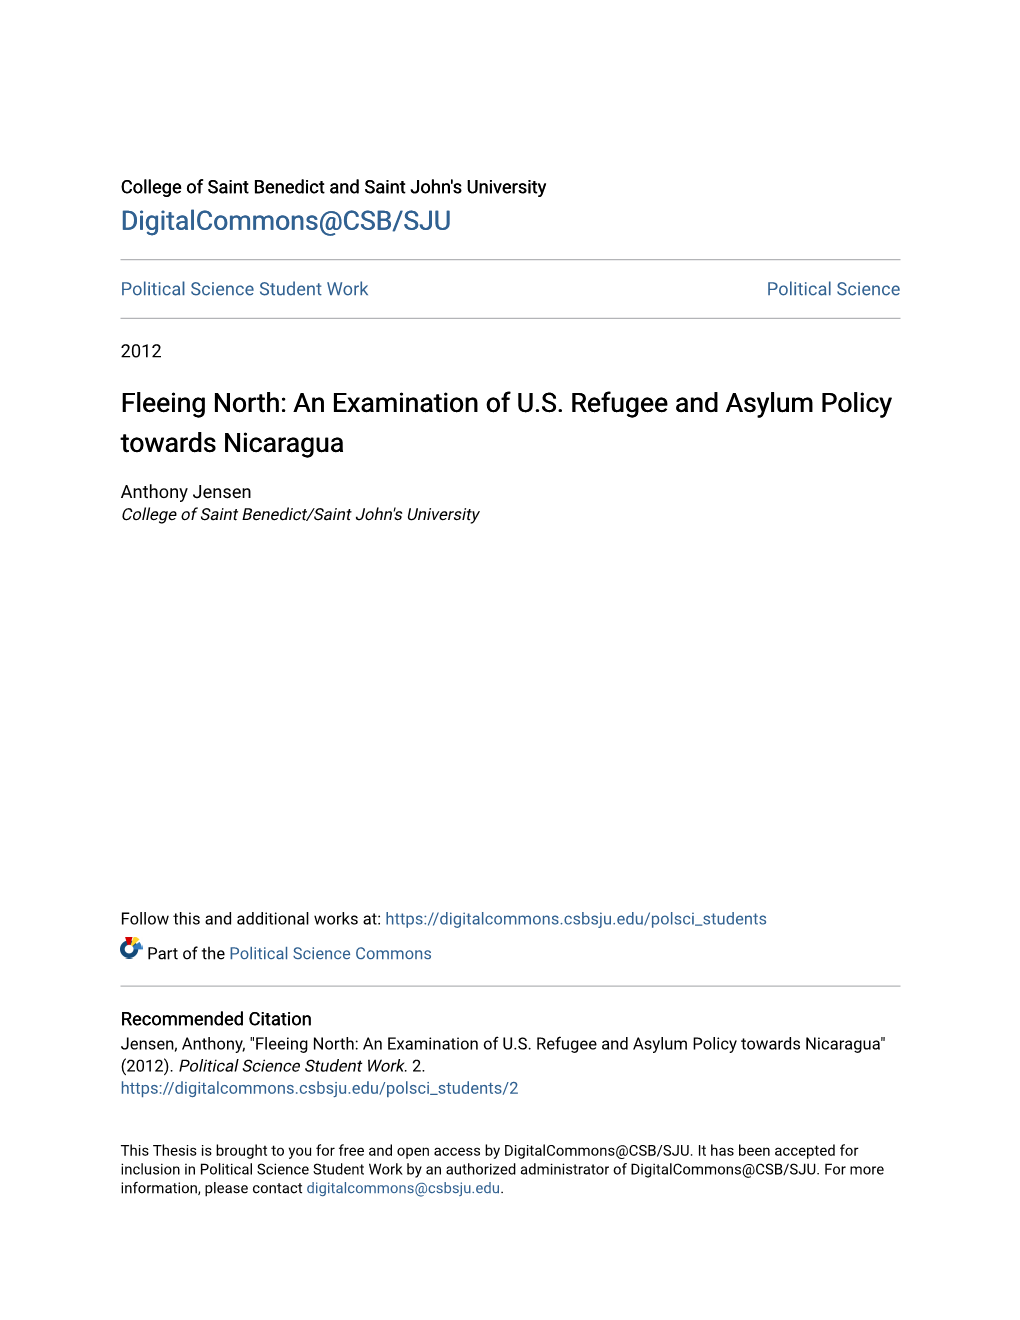 An Examination of US Refugee and Asylum Policy Towards Nicaragua